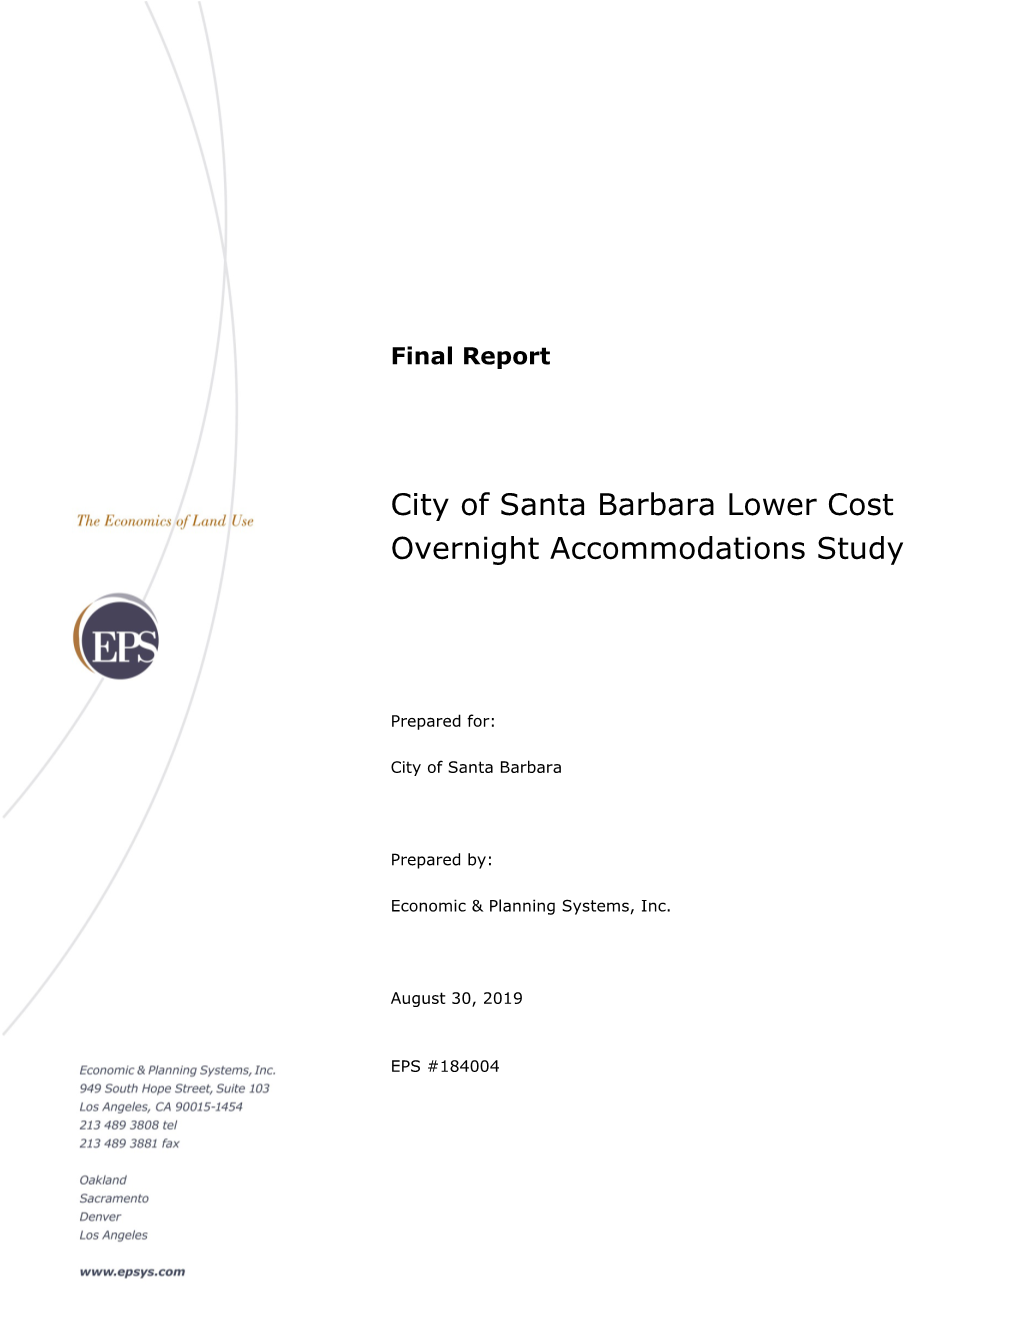 City of Santa Barbara Lower Cost Overnight Accommodations Study